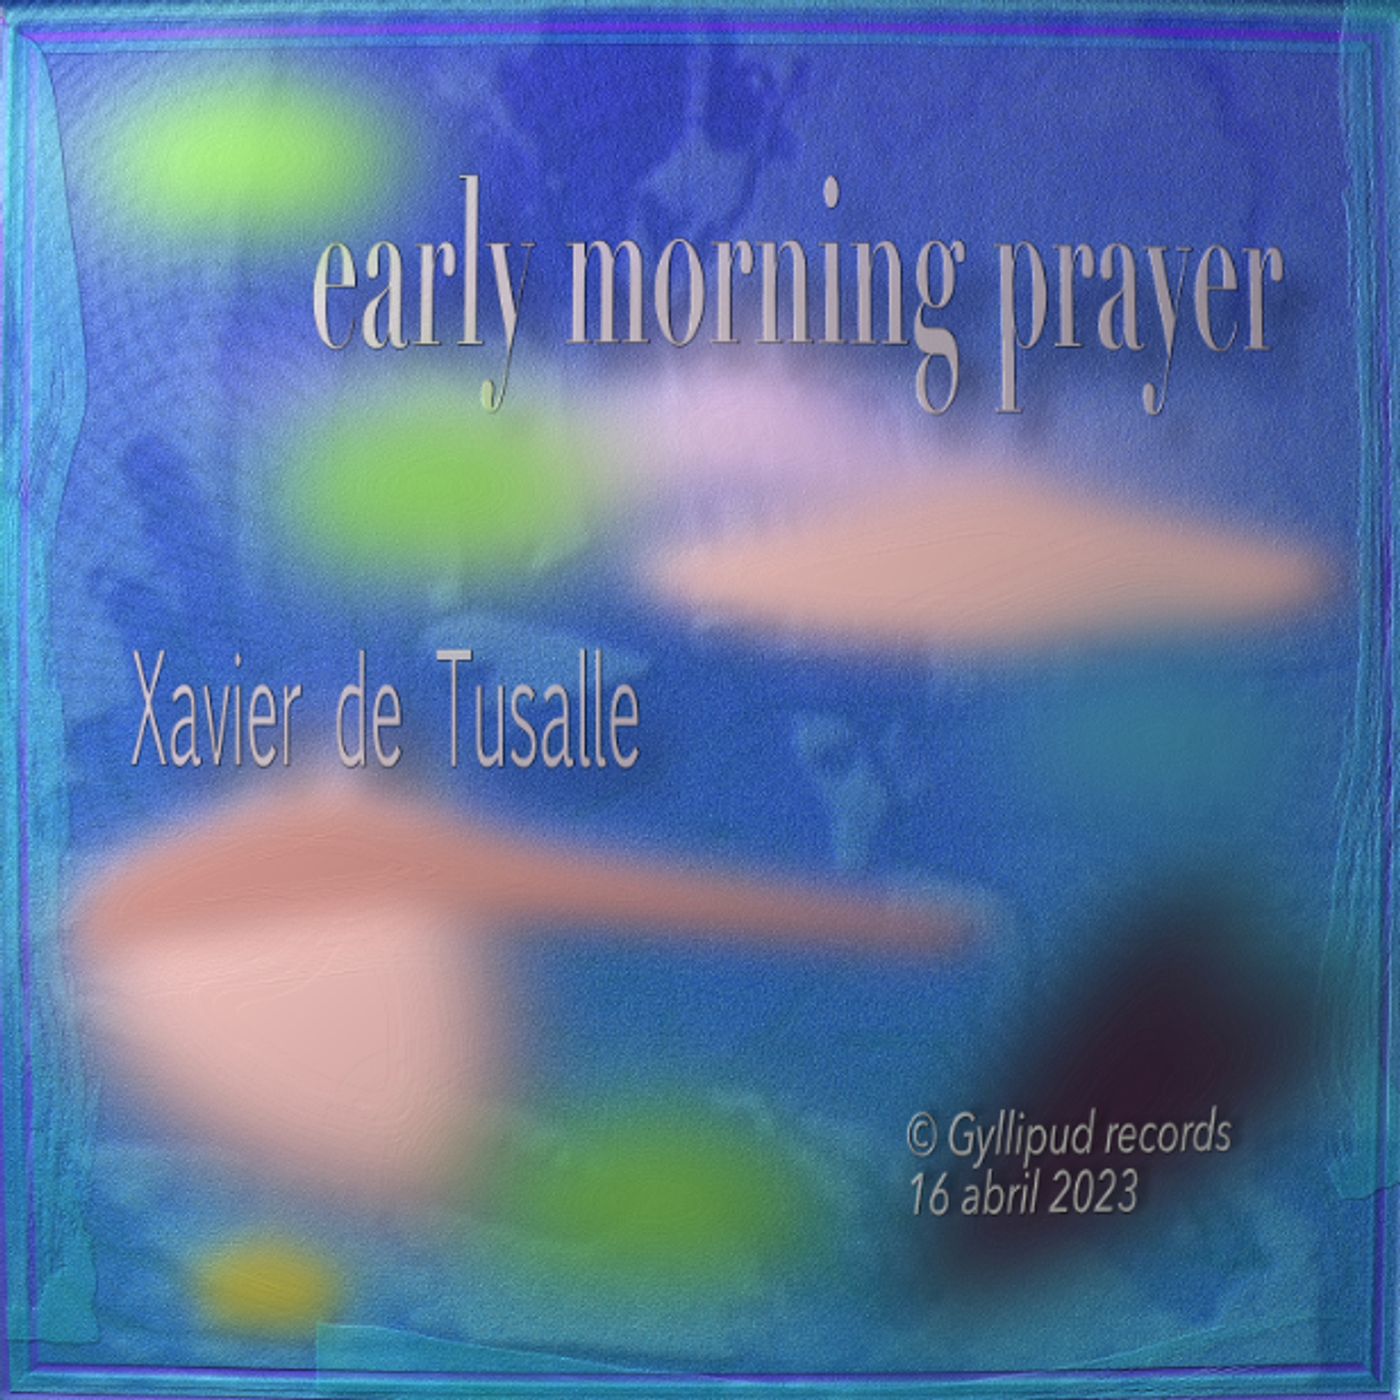 Opus 39.- Early morning prayer - Xavier de Tusalle